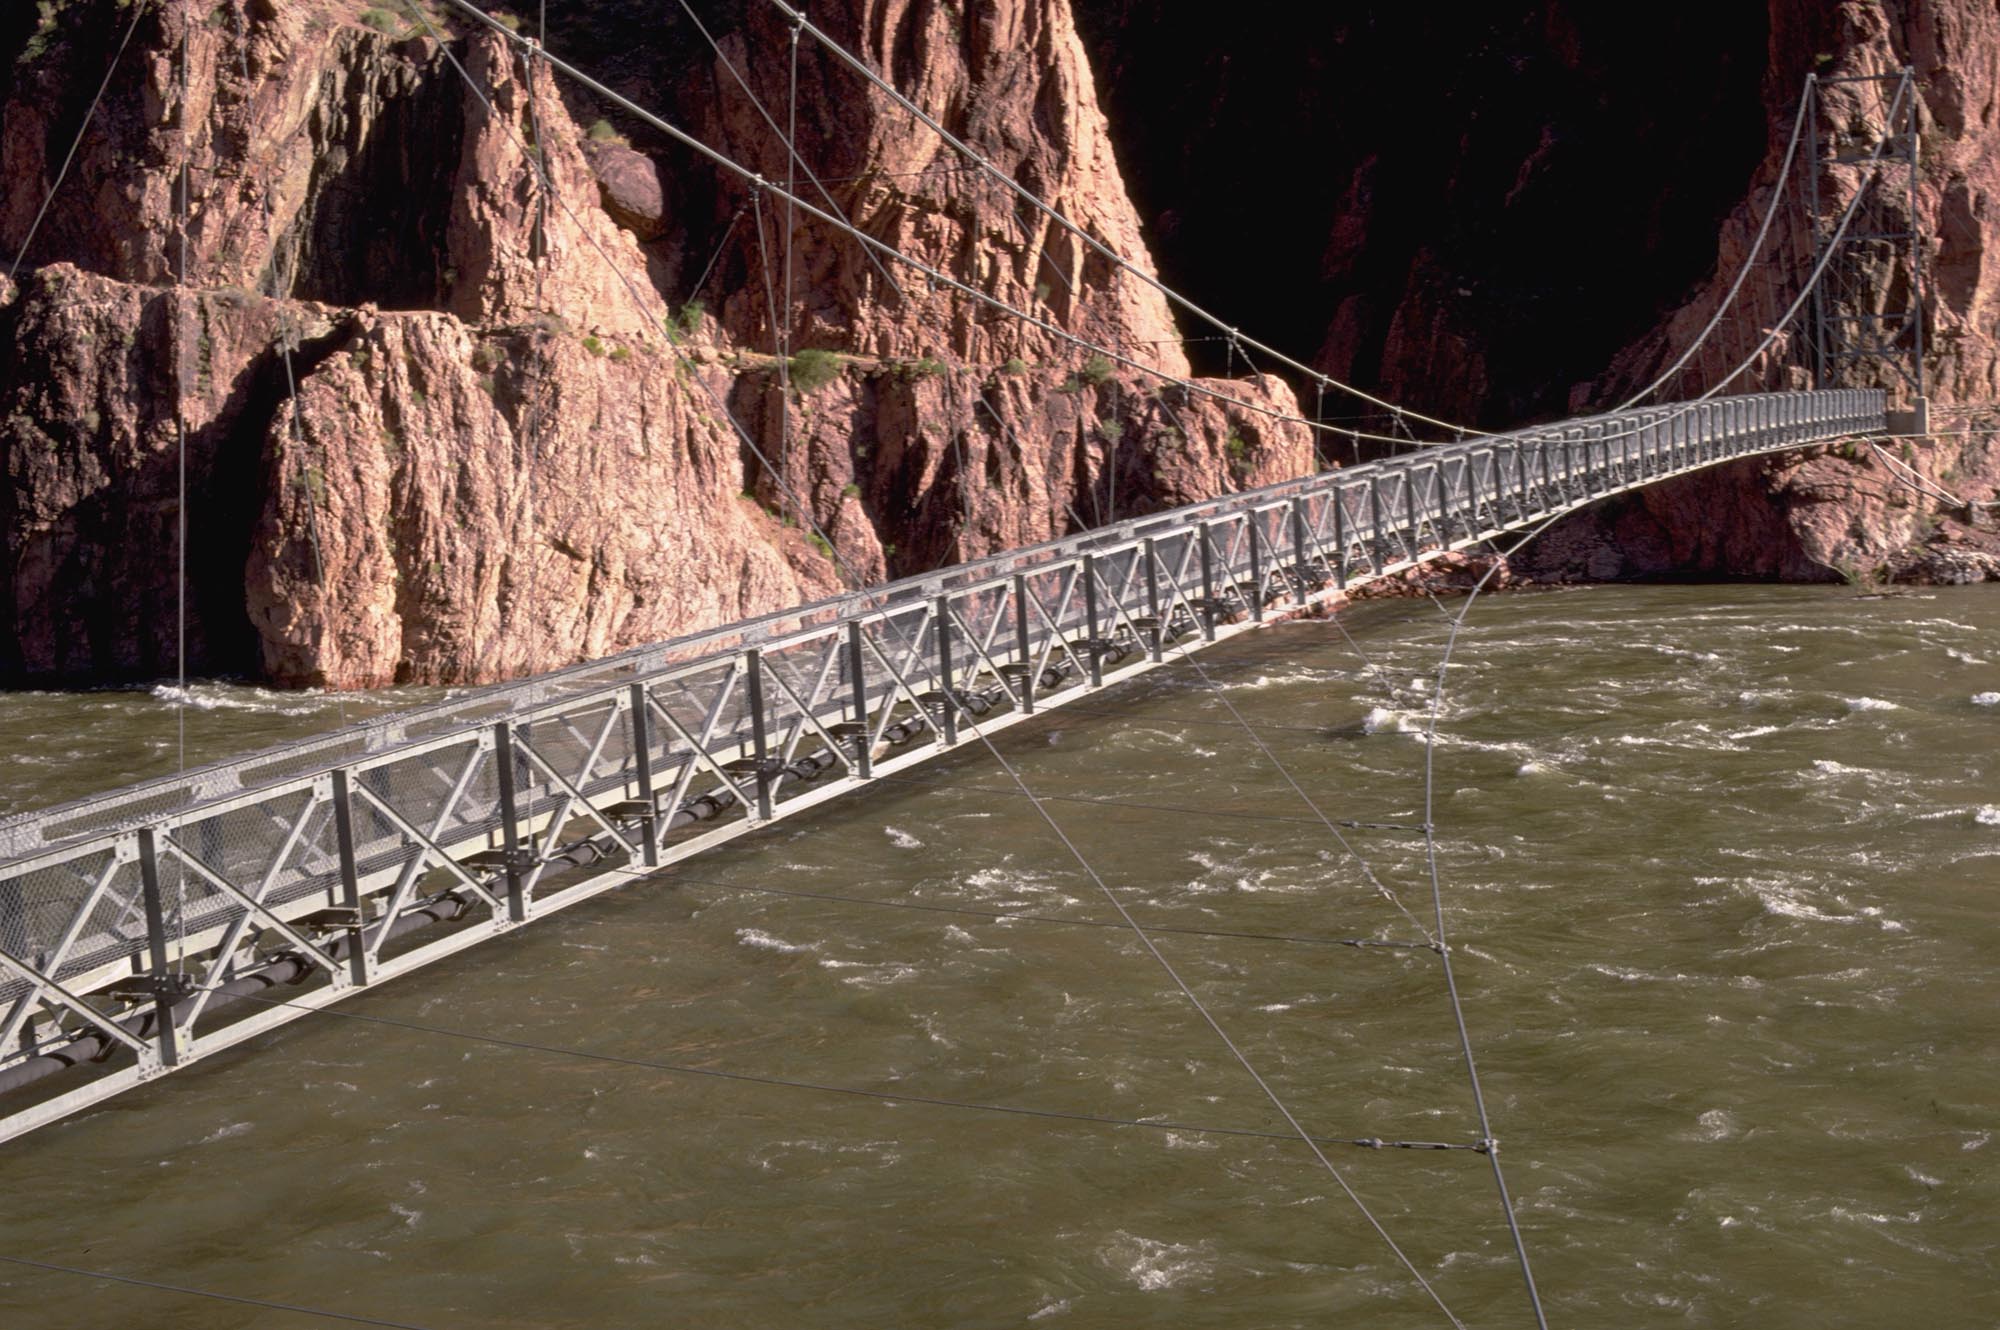 a steel suspension footbridge crossing a green river with a pipeline below the walkway.